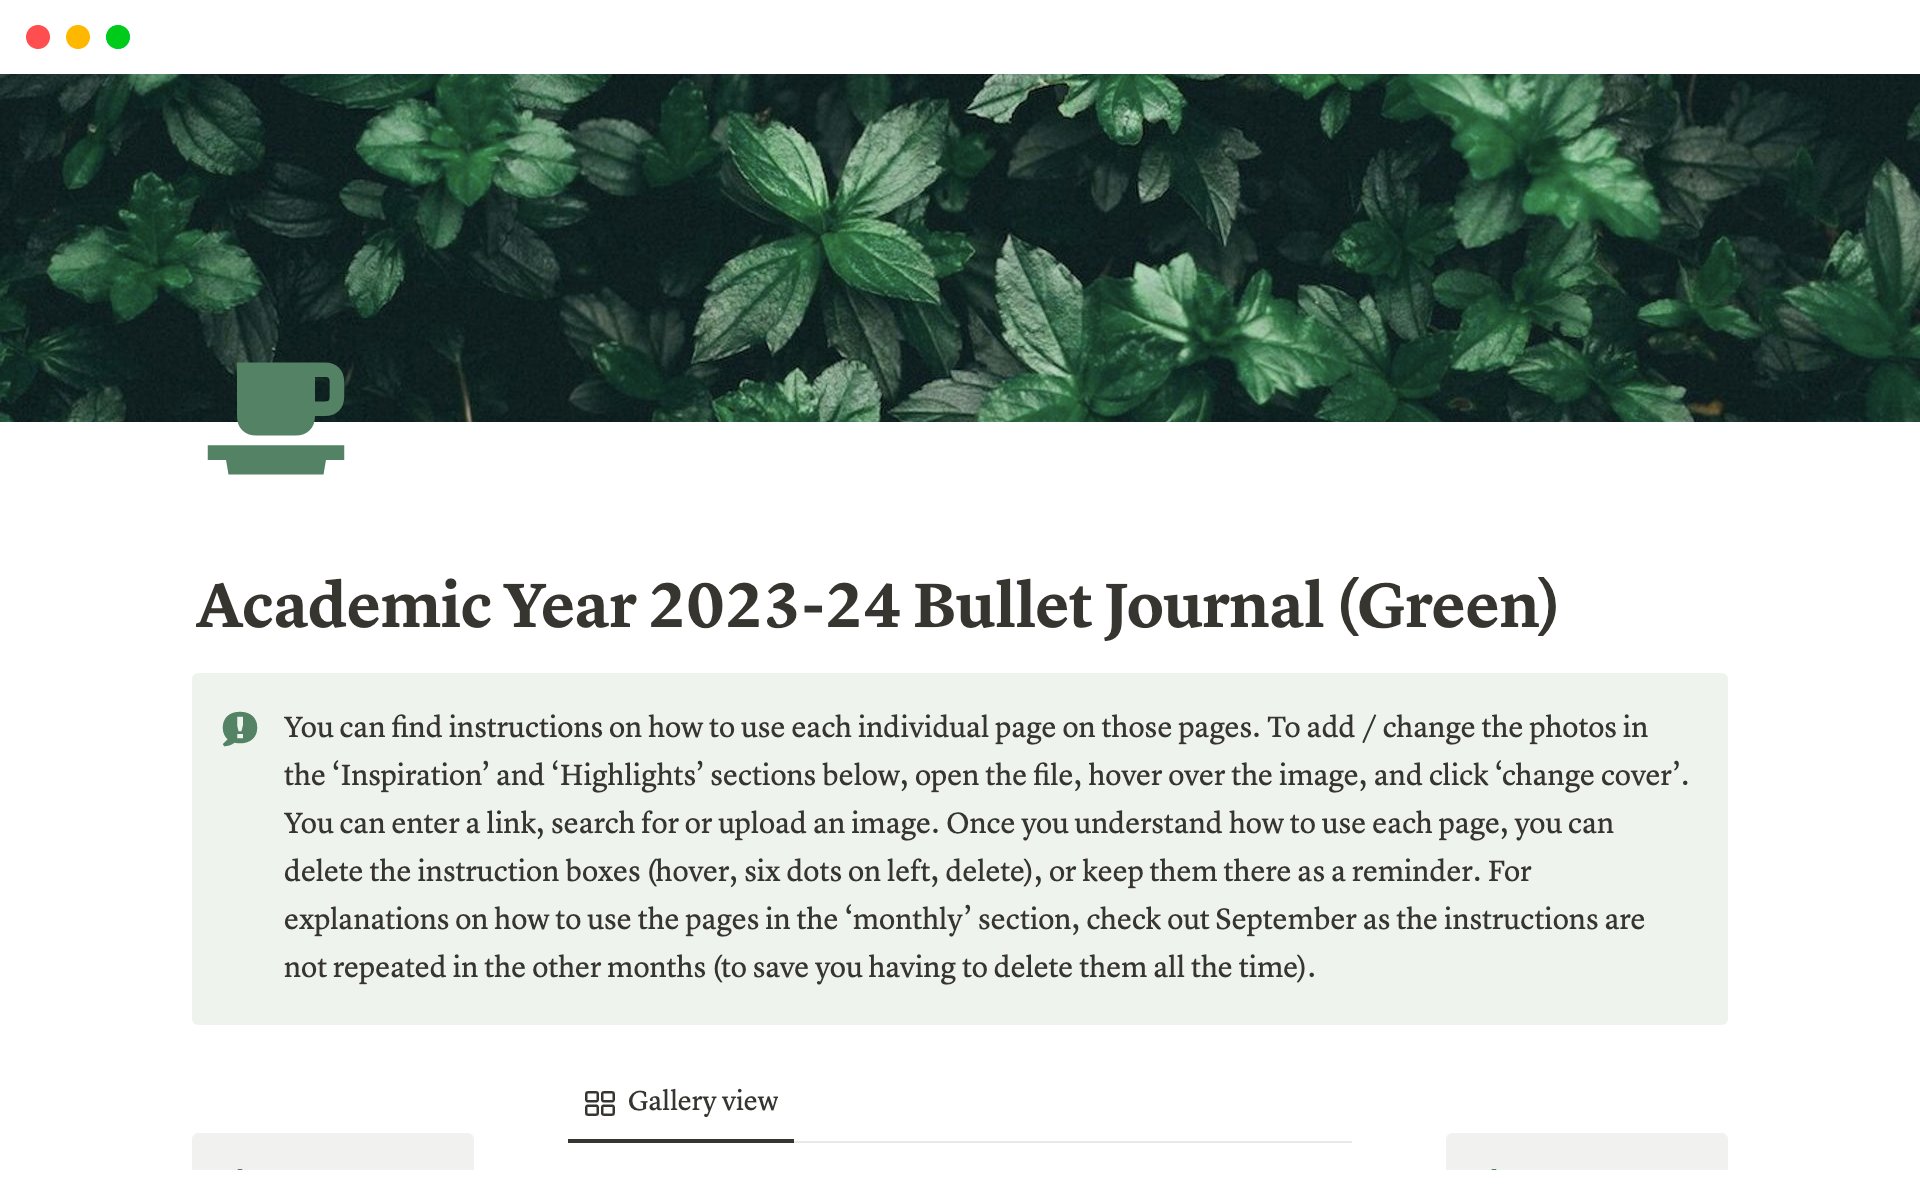 Academic Year 2023-24 Bullet Journal님의 템플릿 미리보기